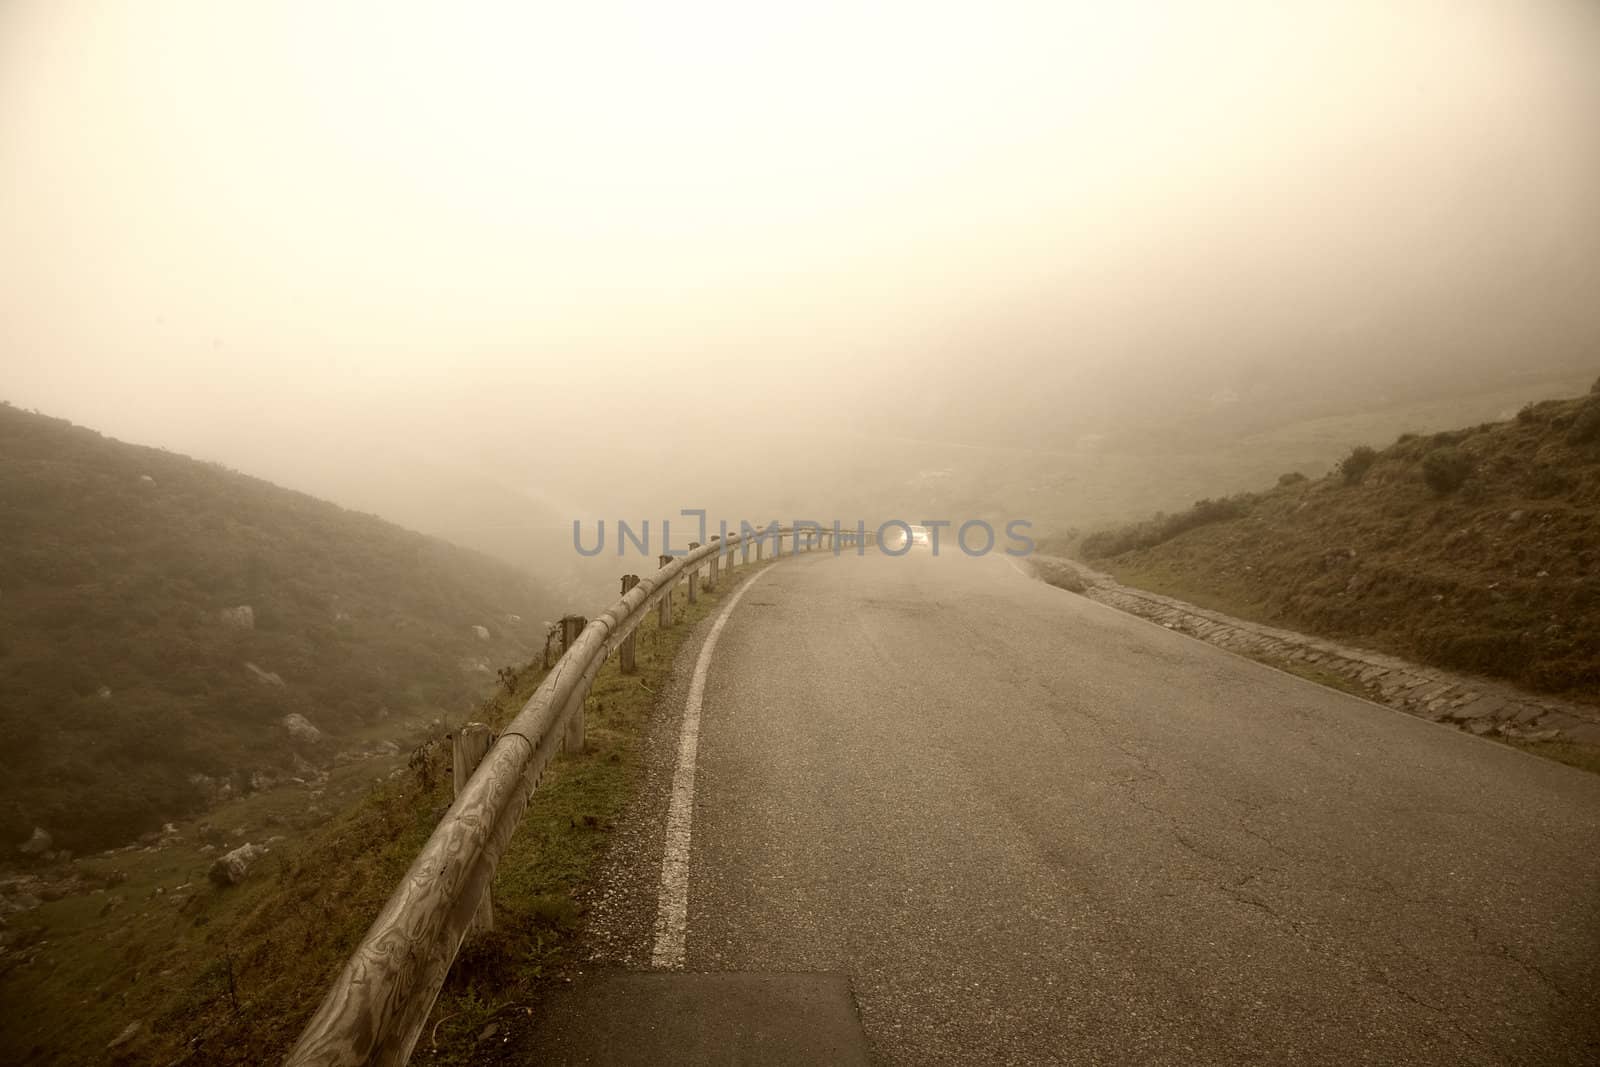 Misty morning near Lago Enol in the mountains of Picos de Europa - Asturias, Spain.